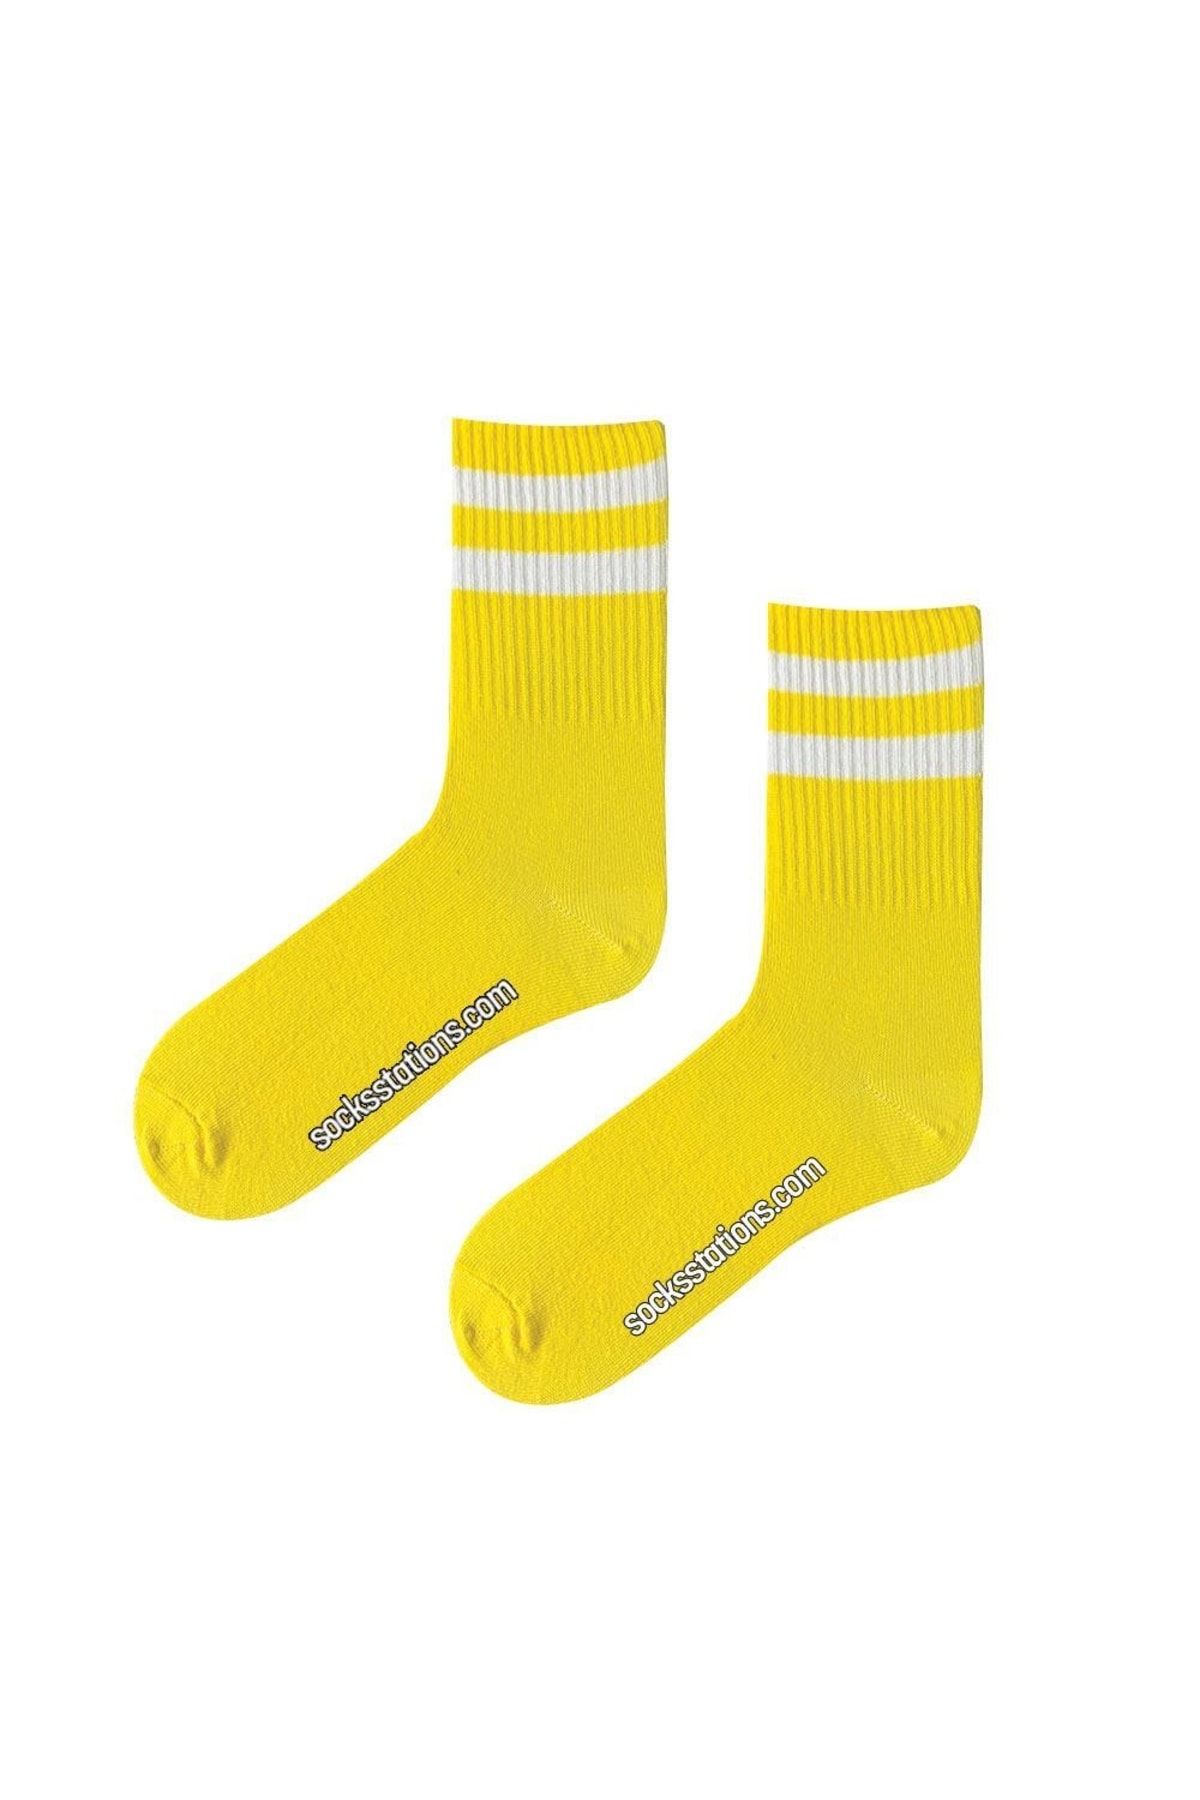 Socks Stations Ünisex Sarı Renkli , Beyaz Çizgili Uzun Kolej Spor Çorap